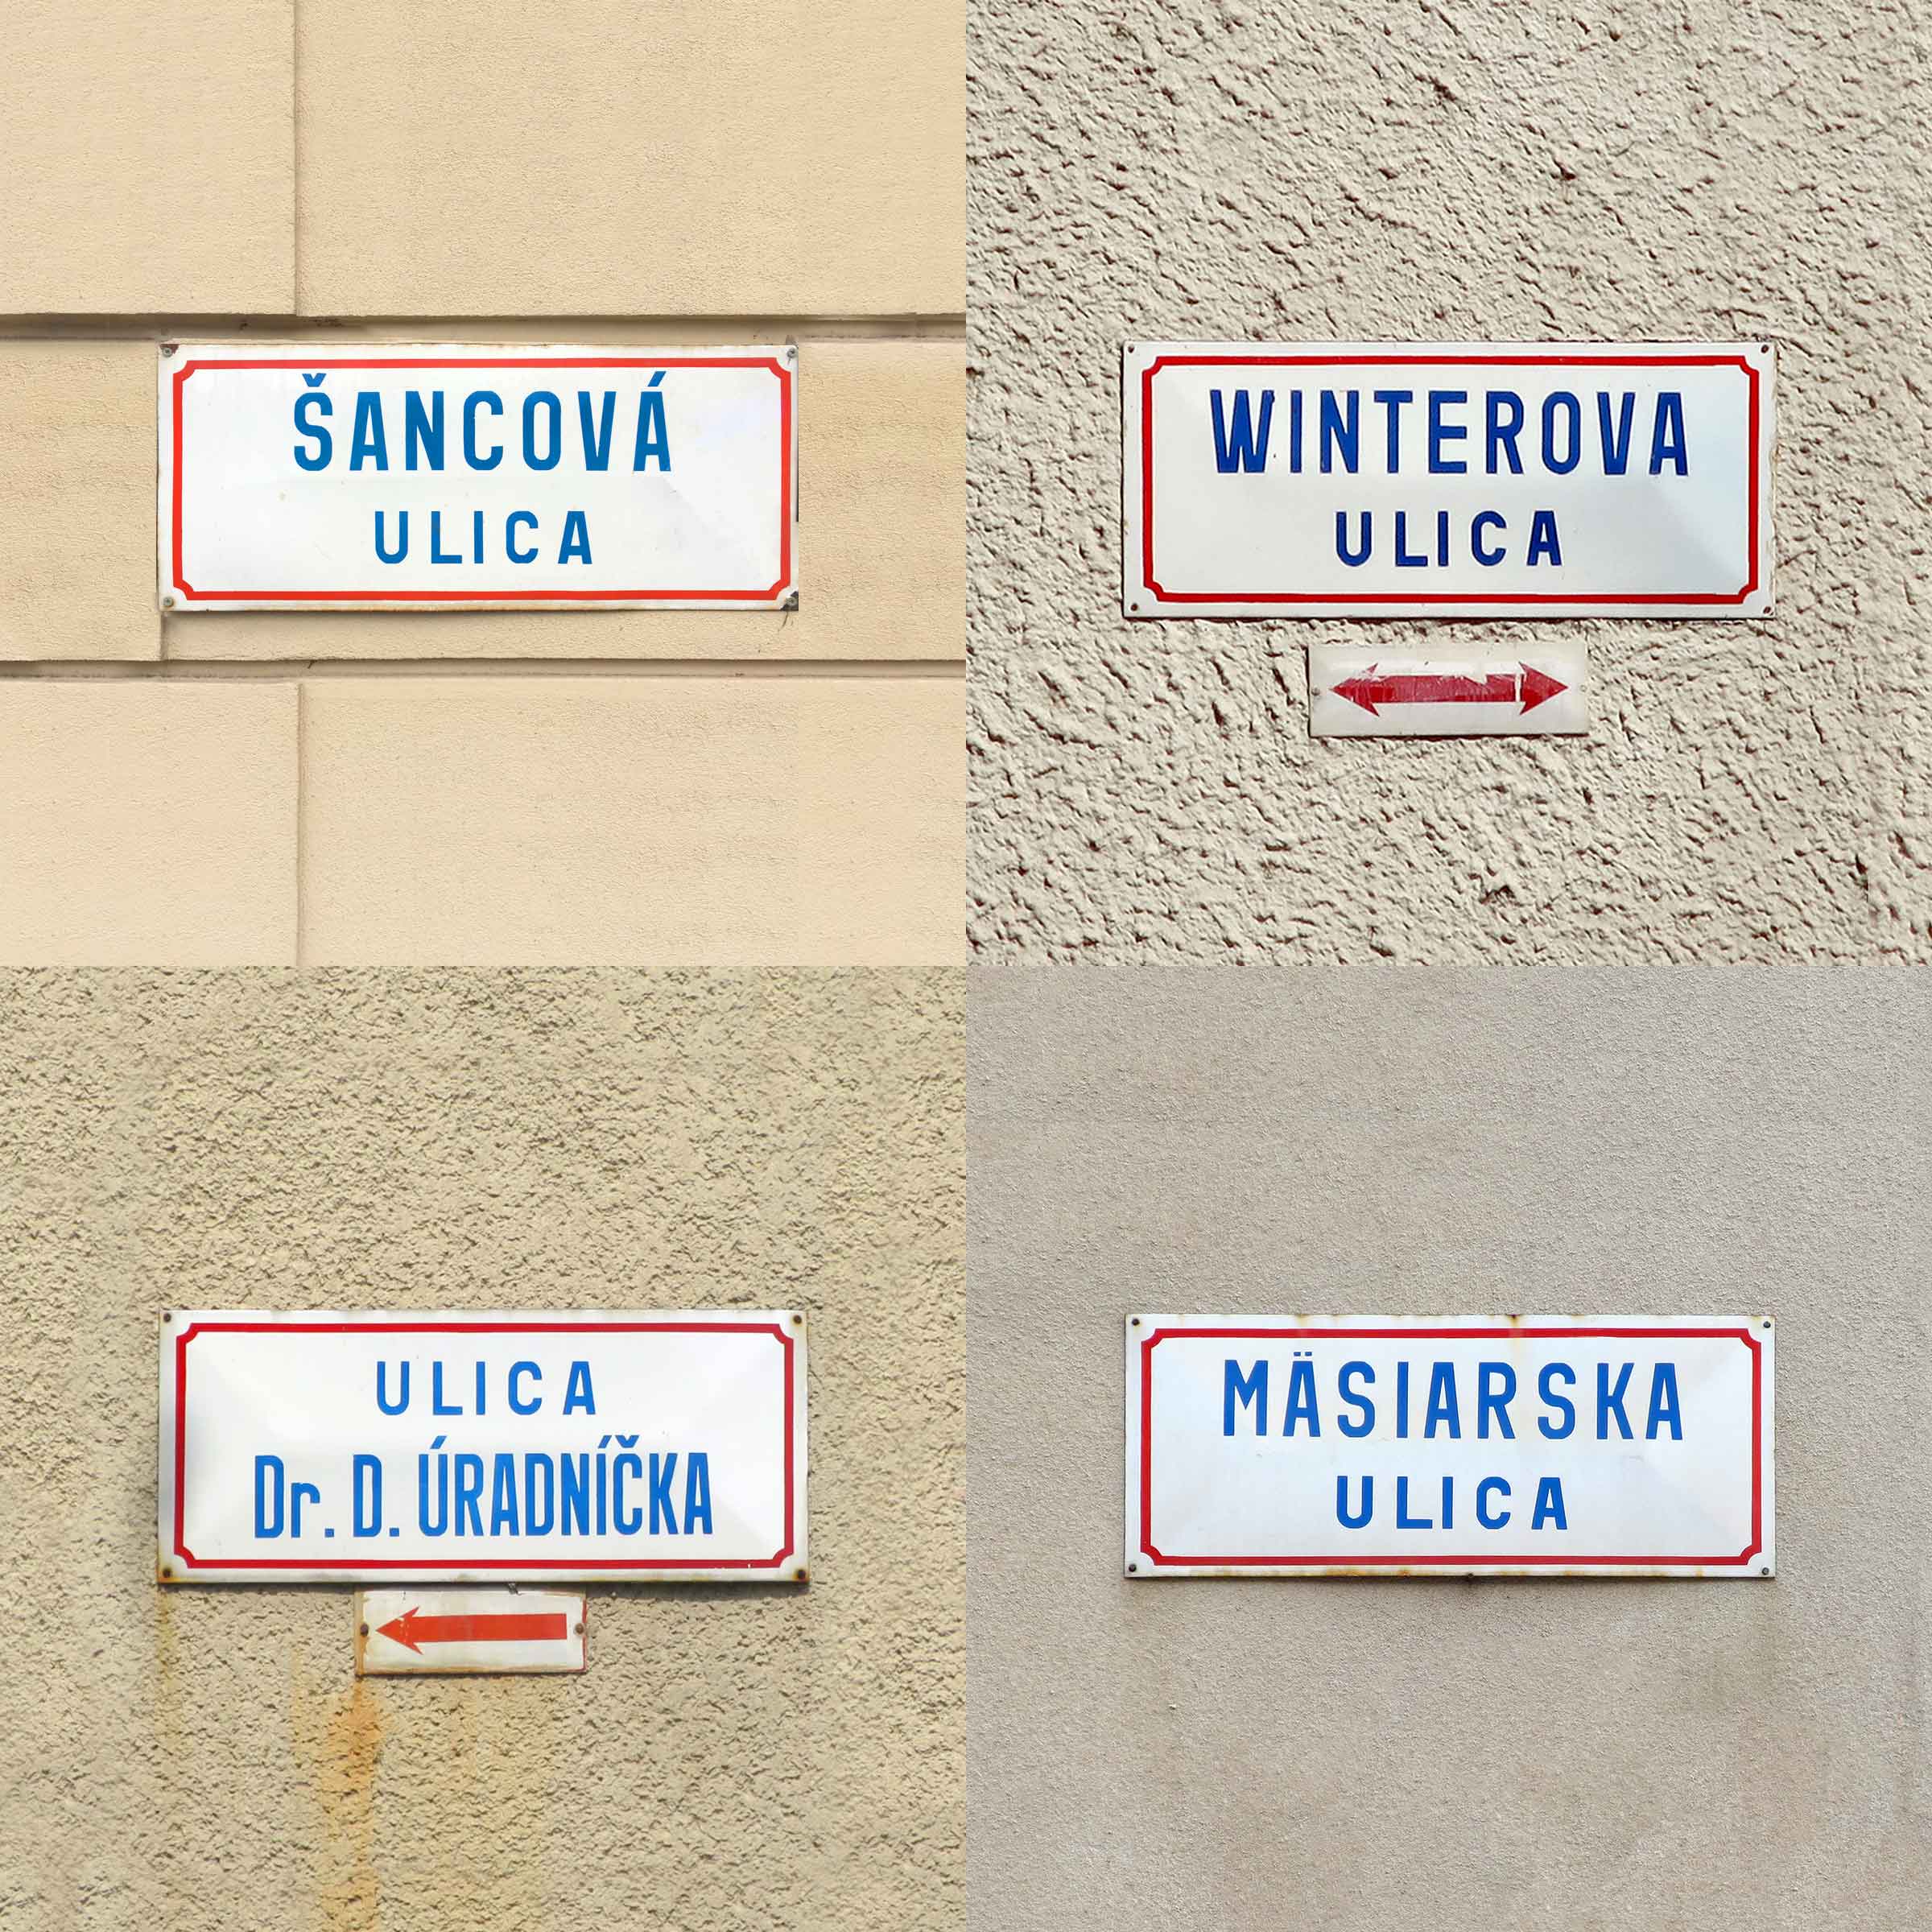 The classic Slovak street plates.